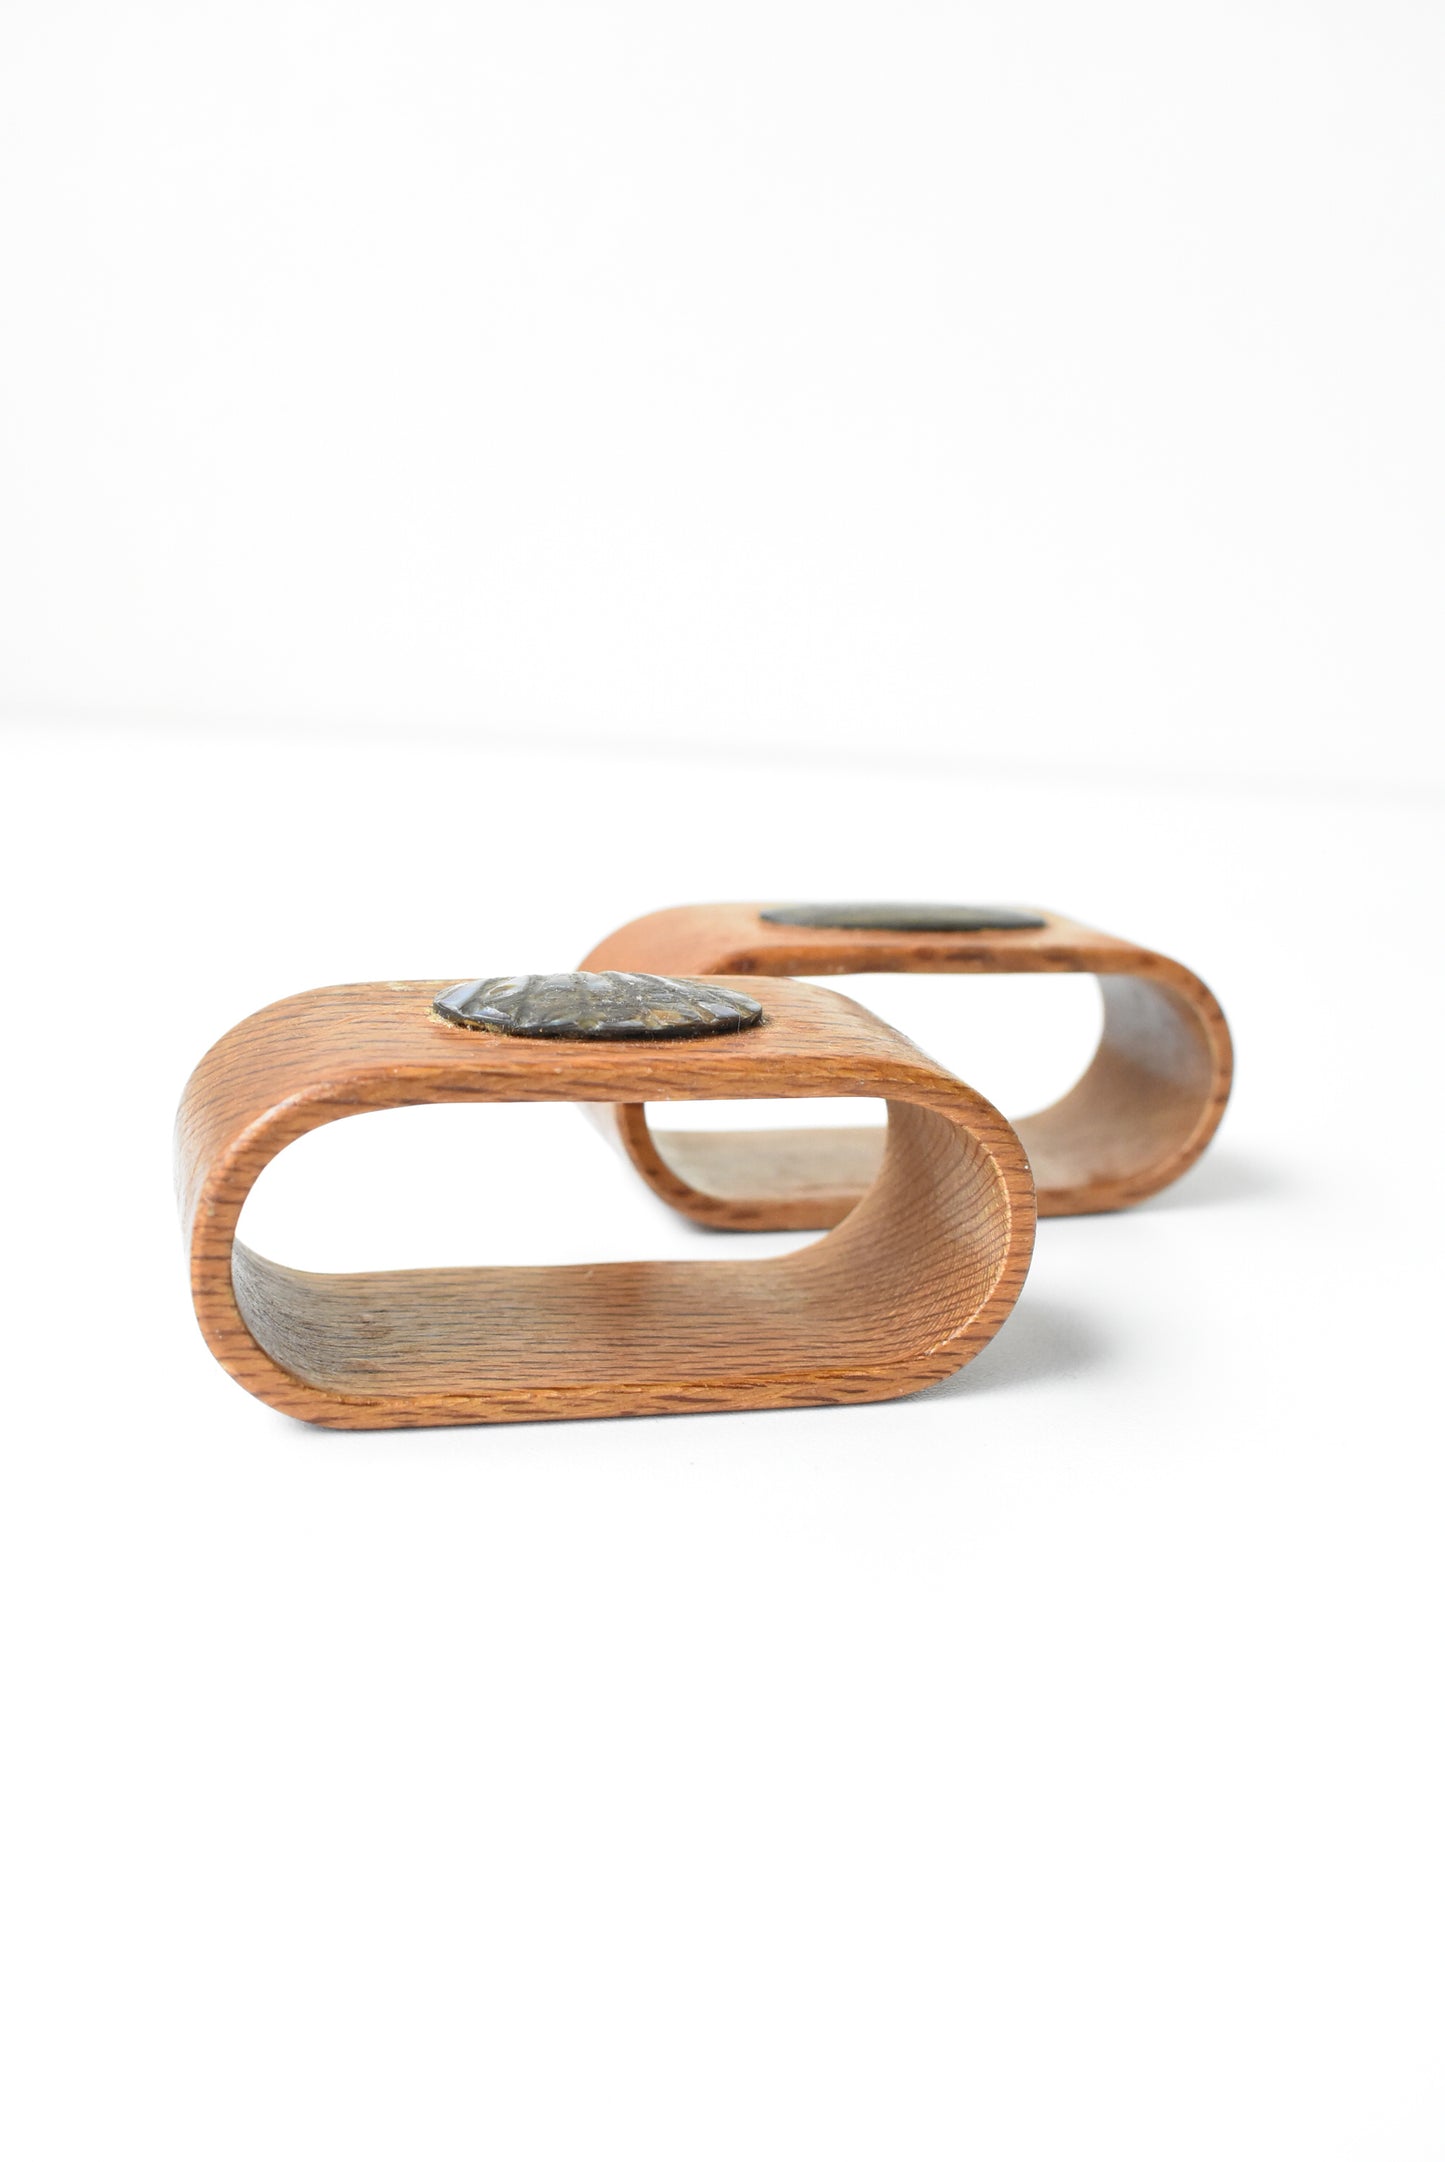 Retro Kiwiana paua & wood napkin rings